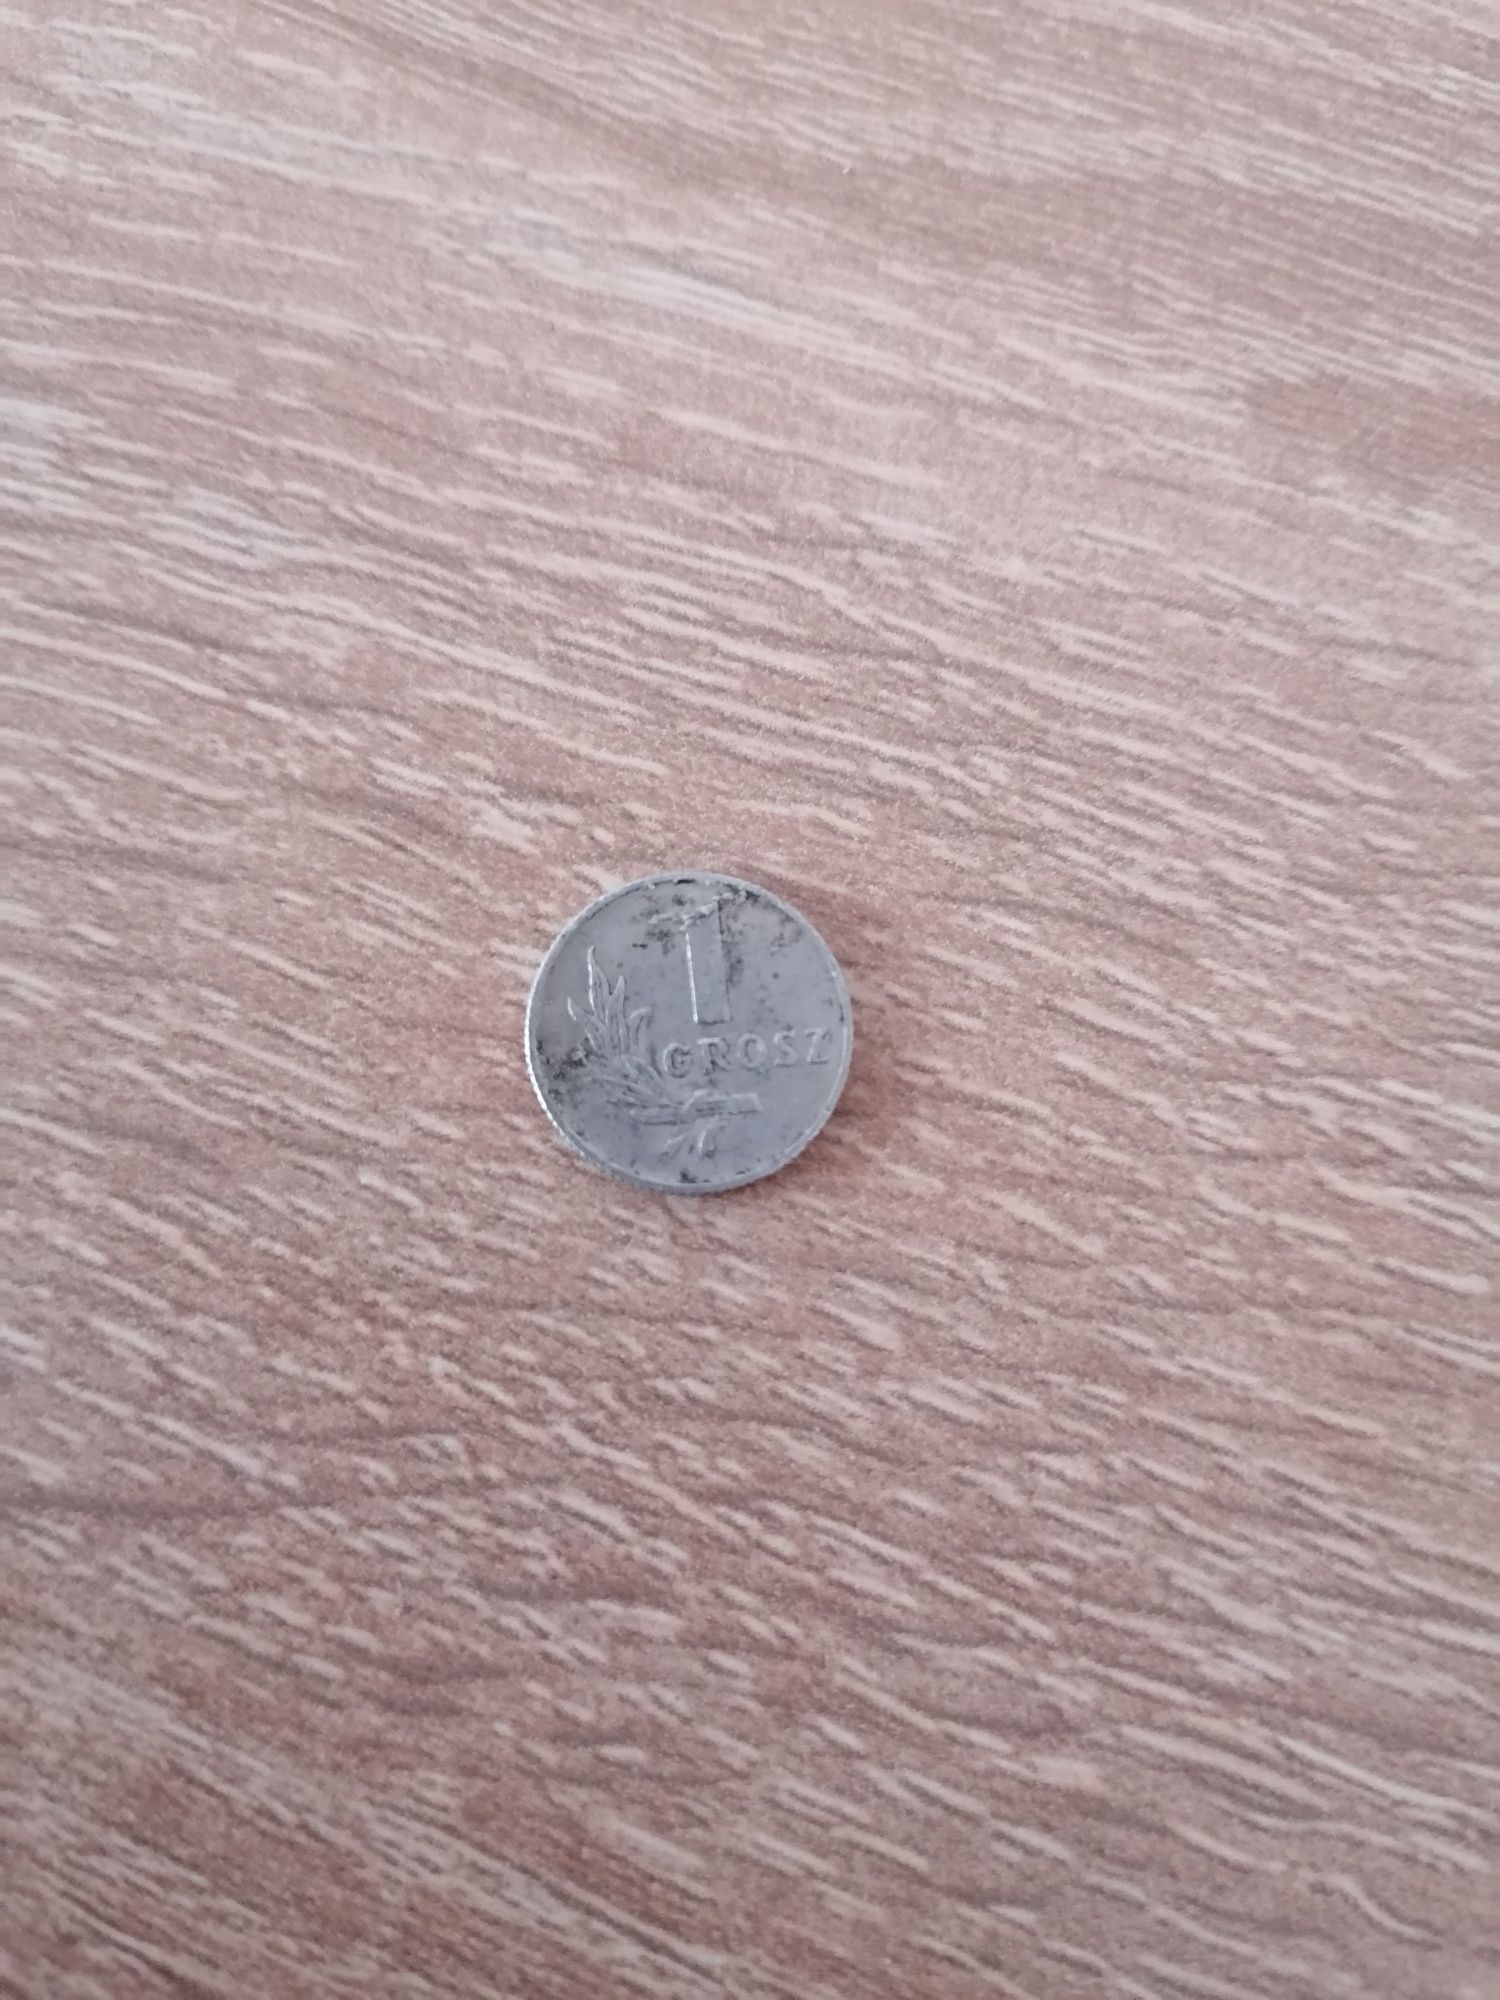 Moneta 1 grosz 1949 rok